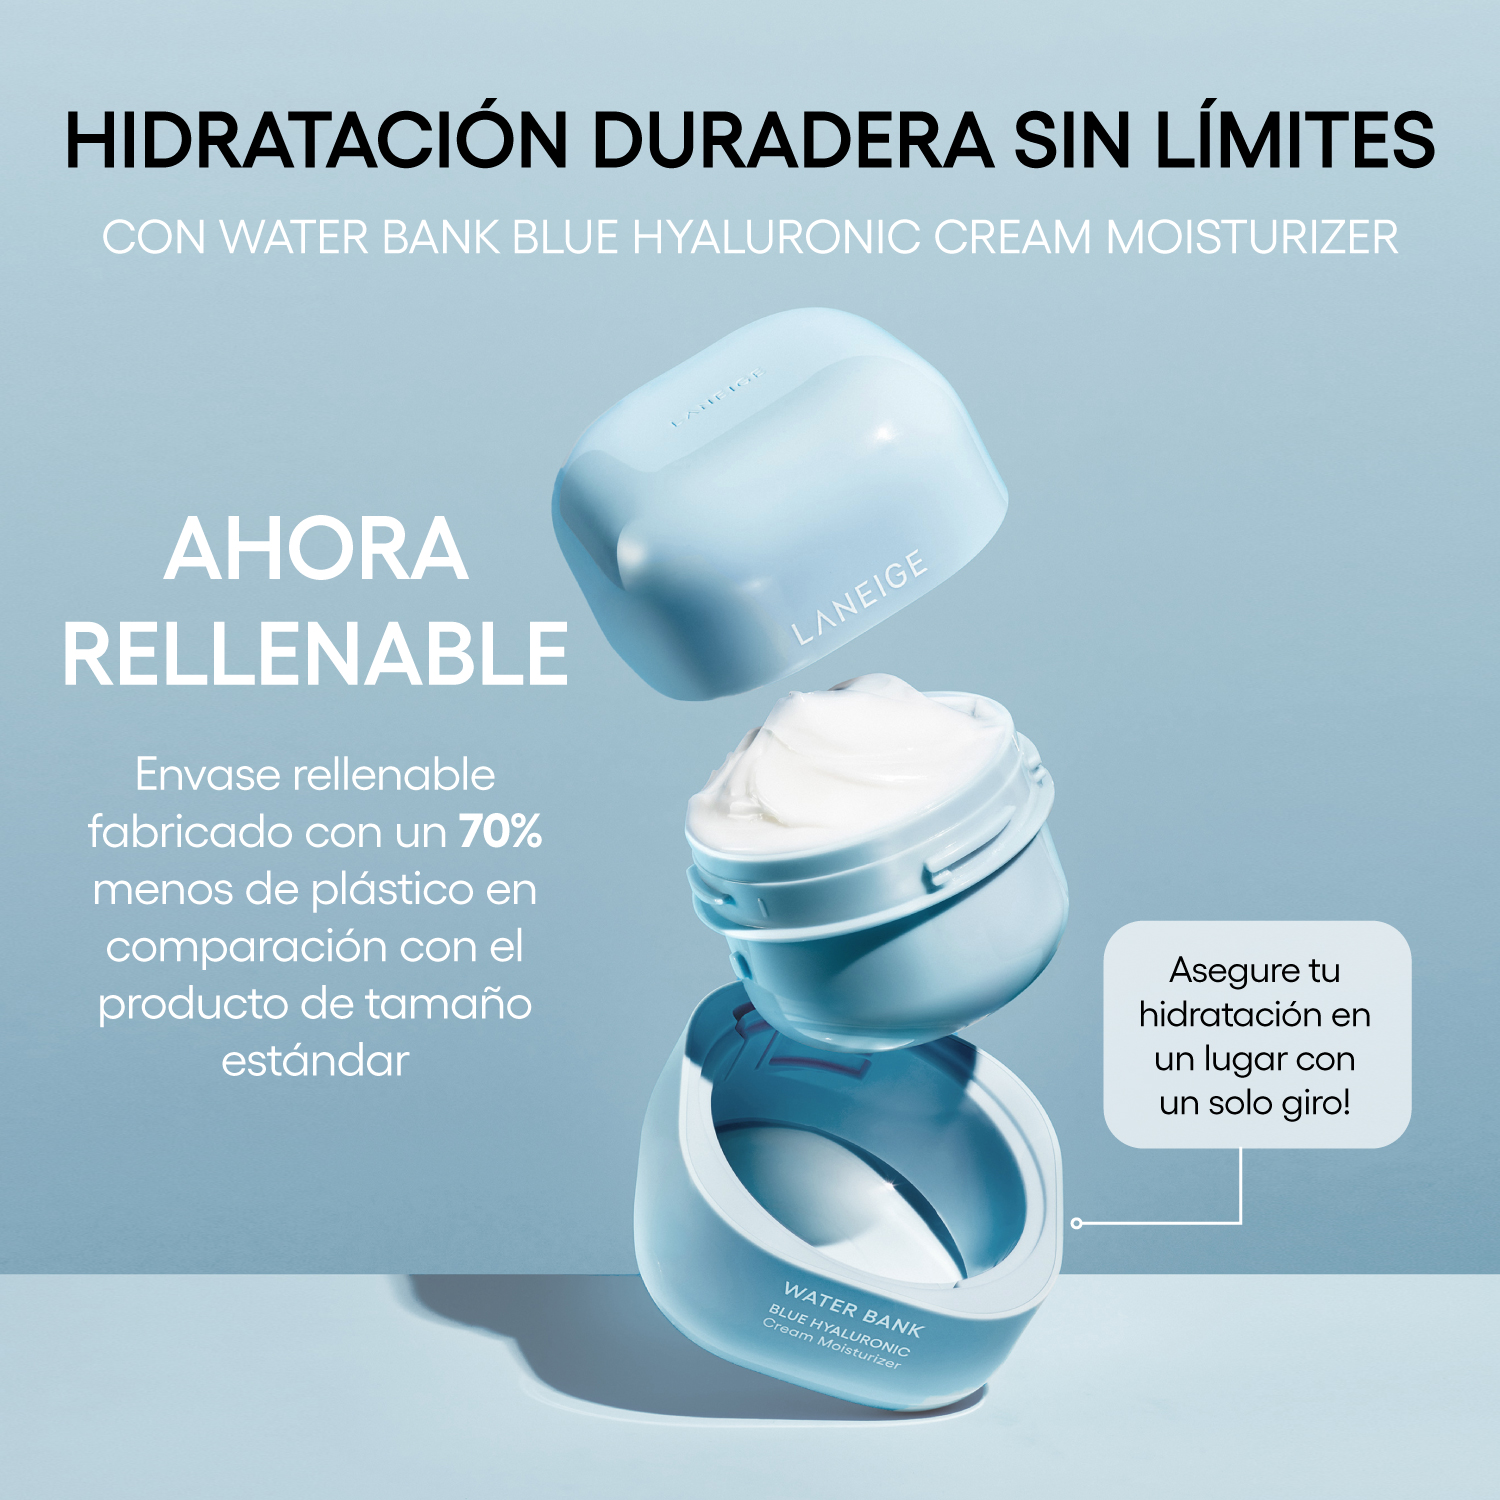 WATERBANK BLUE HYALURONIC CREAM MOISTURIZER (CREMA HIDRATANTE)